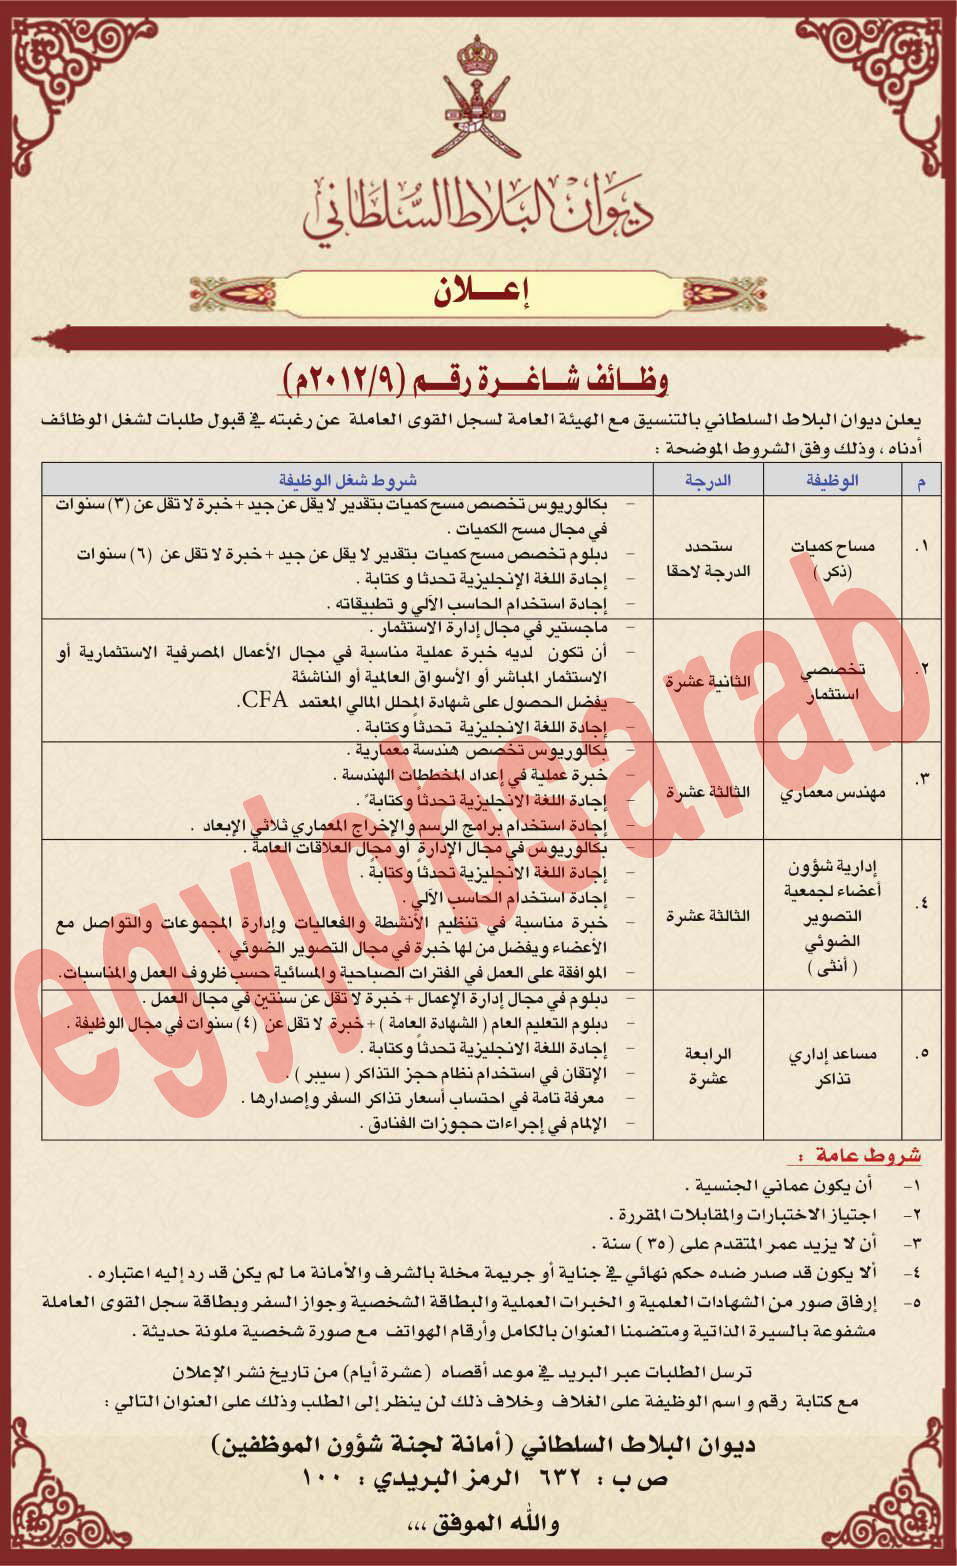 وظائف خالية من جريدة عمان سلطنة عمان السبت 20-10-2012  %D8%AC%D8%B1%D9%8A%D8%AF%D8%A9+%D8%B9%D9%85%D8%A7%D9%86+5